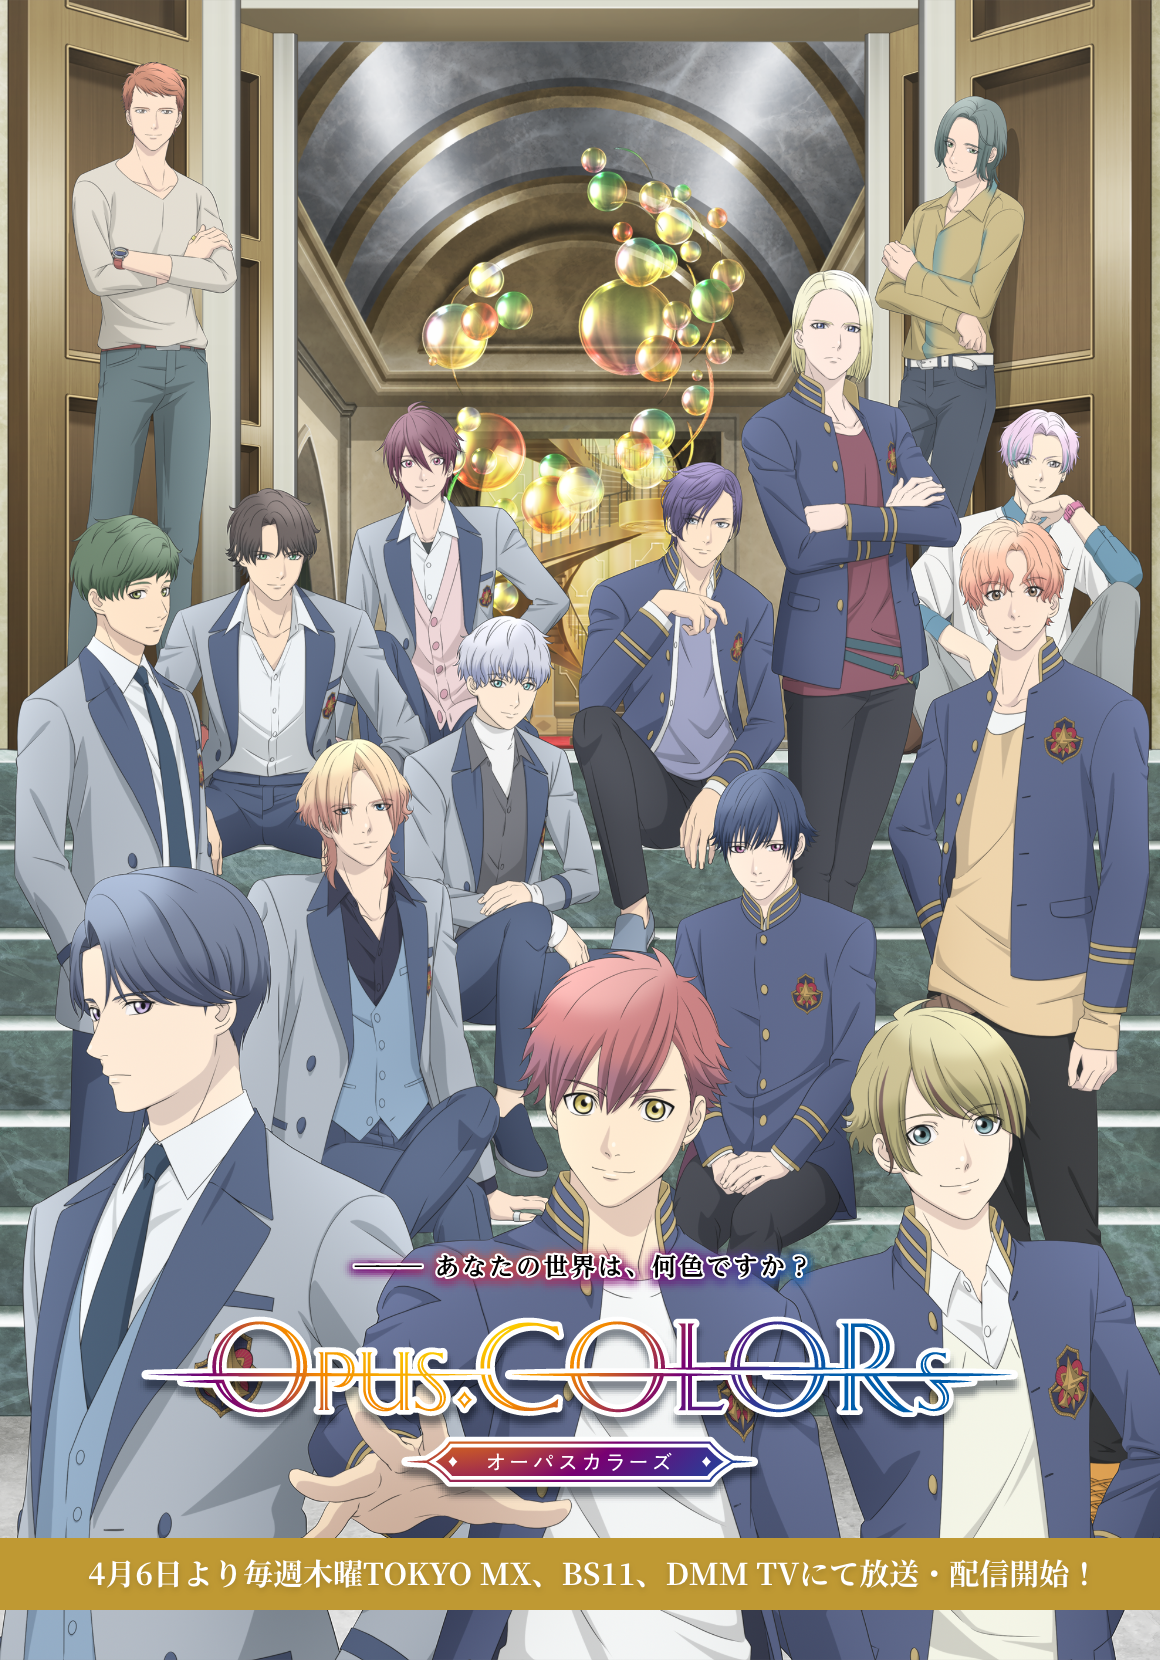 TVアニメ「Opus.COLORs」公式サイト―あなたの世界は、何色ですか？ 4月6日より毎週木曜TOKYO MX、BS11、DMM TVにて放送・配信開始！